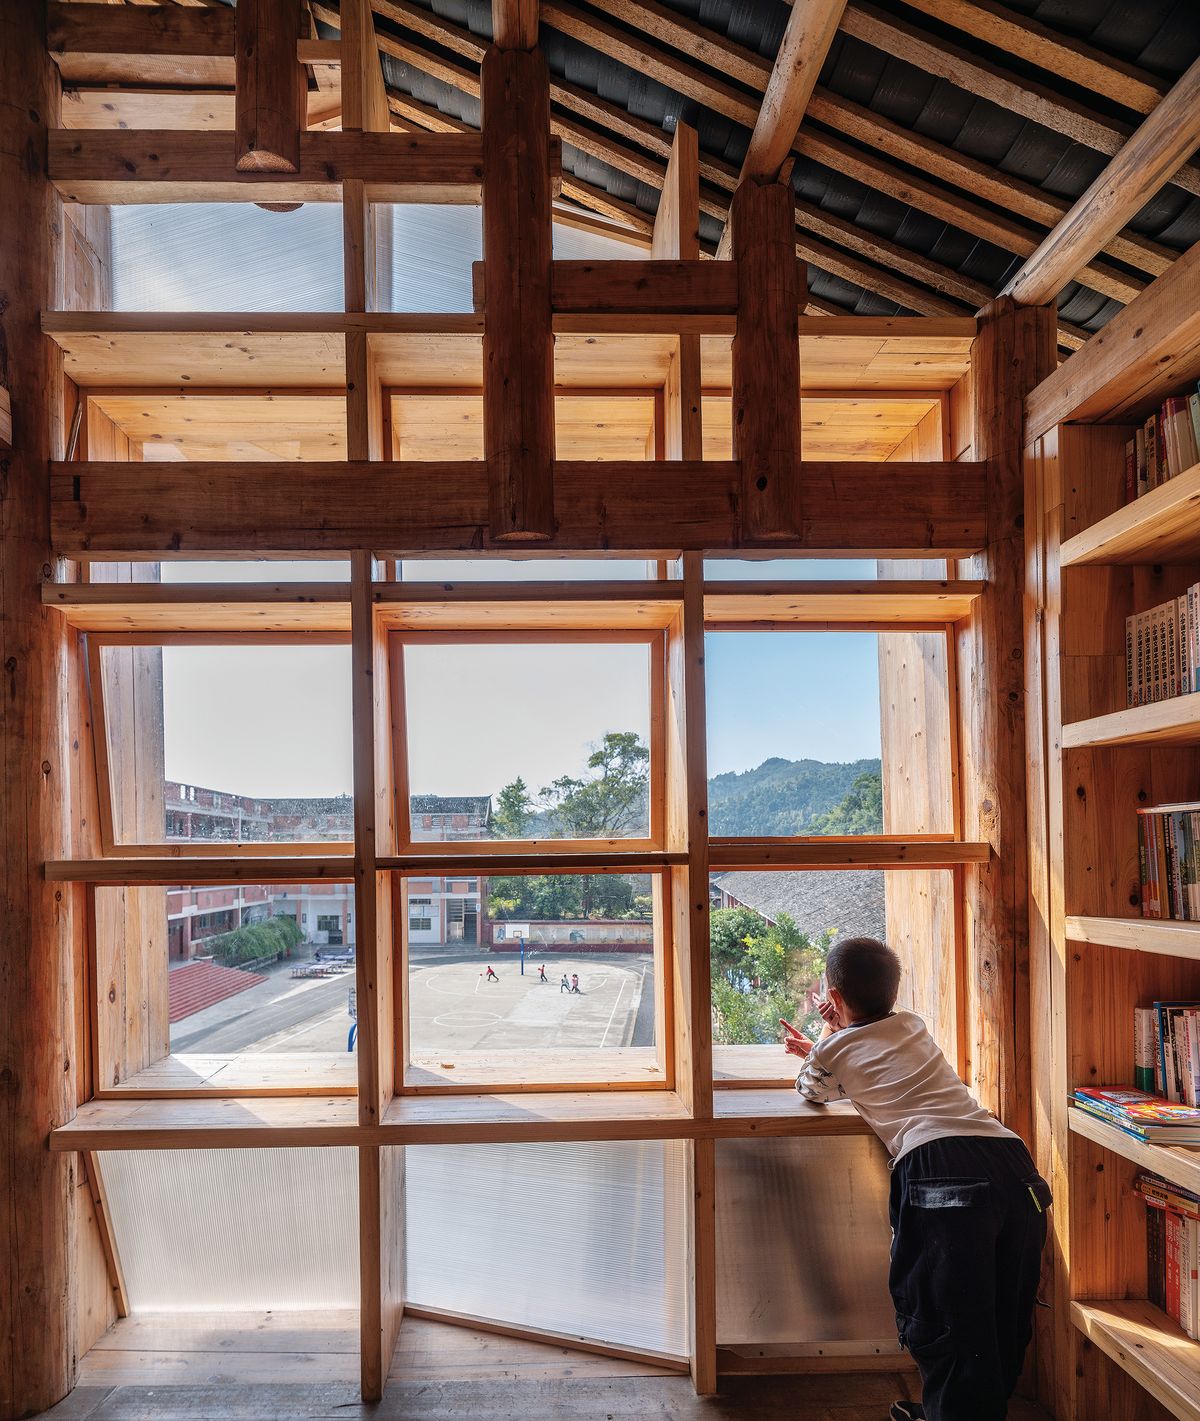 Pingtan Book House